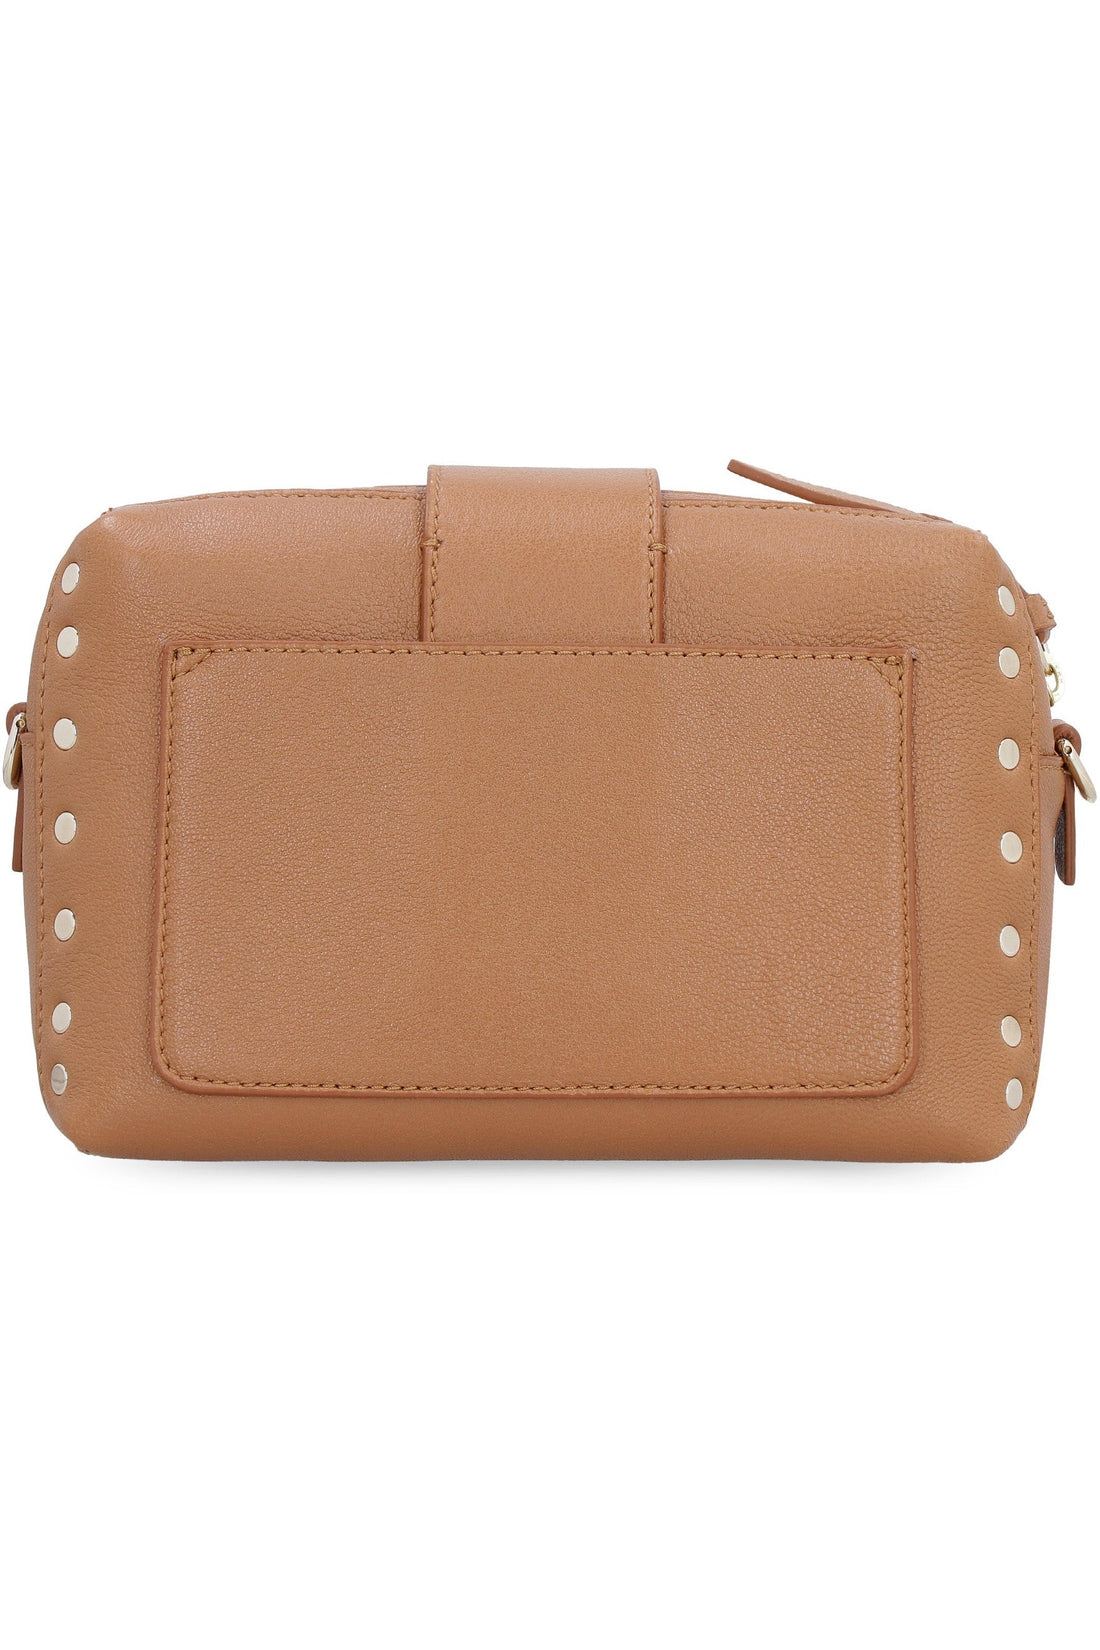 Zanellato-OUTLET-SALE-Oda leather crossbody bag-ARCHIVIST